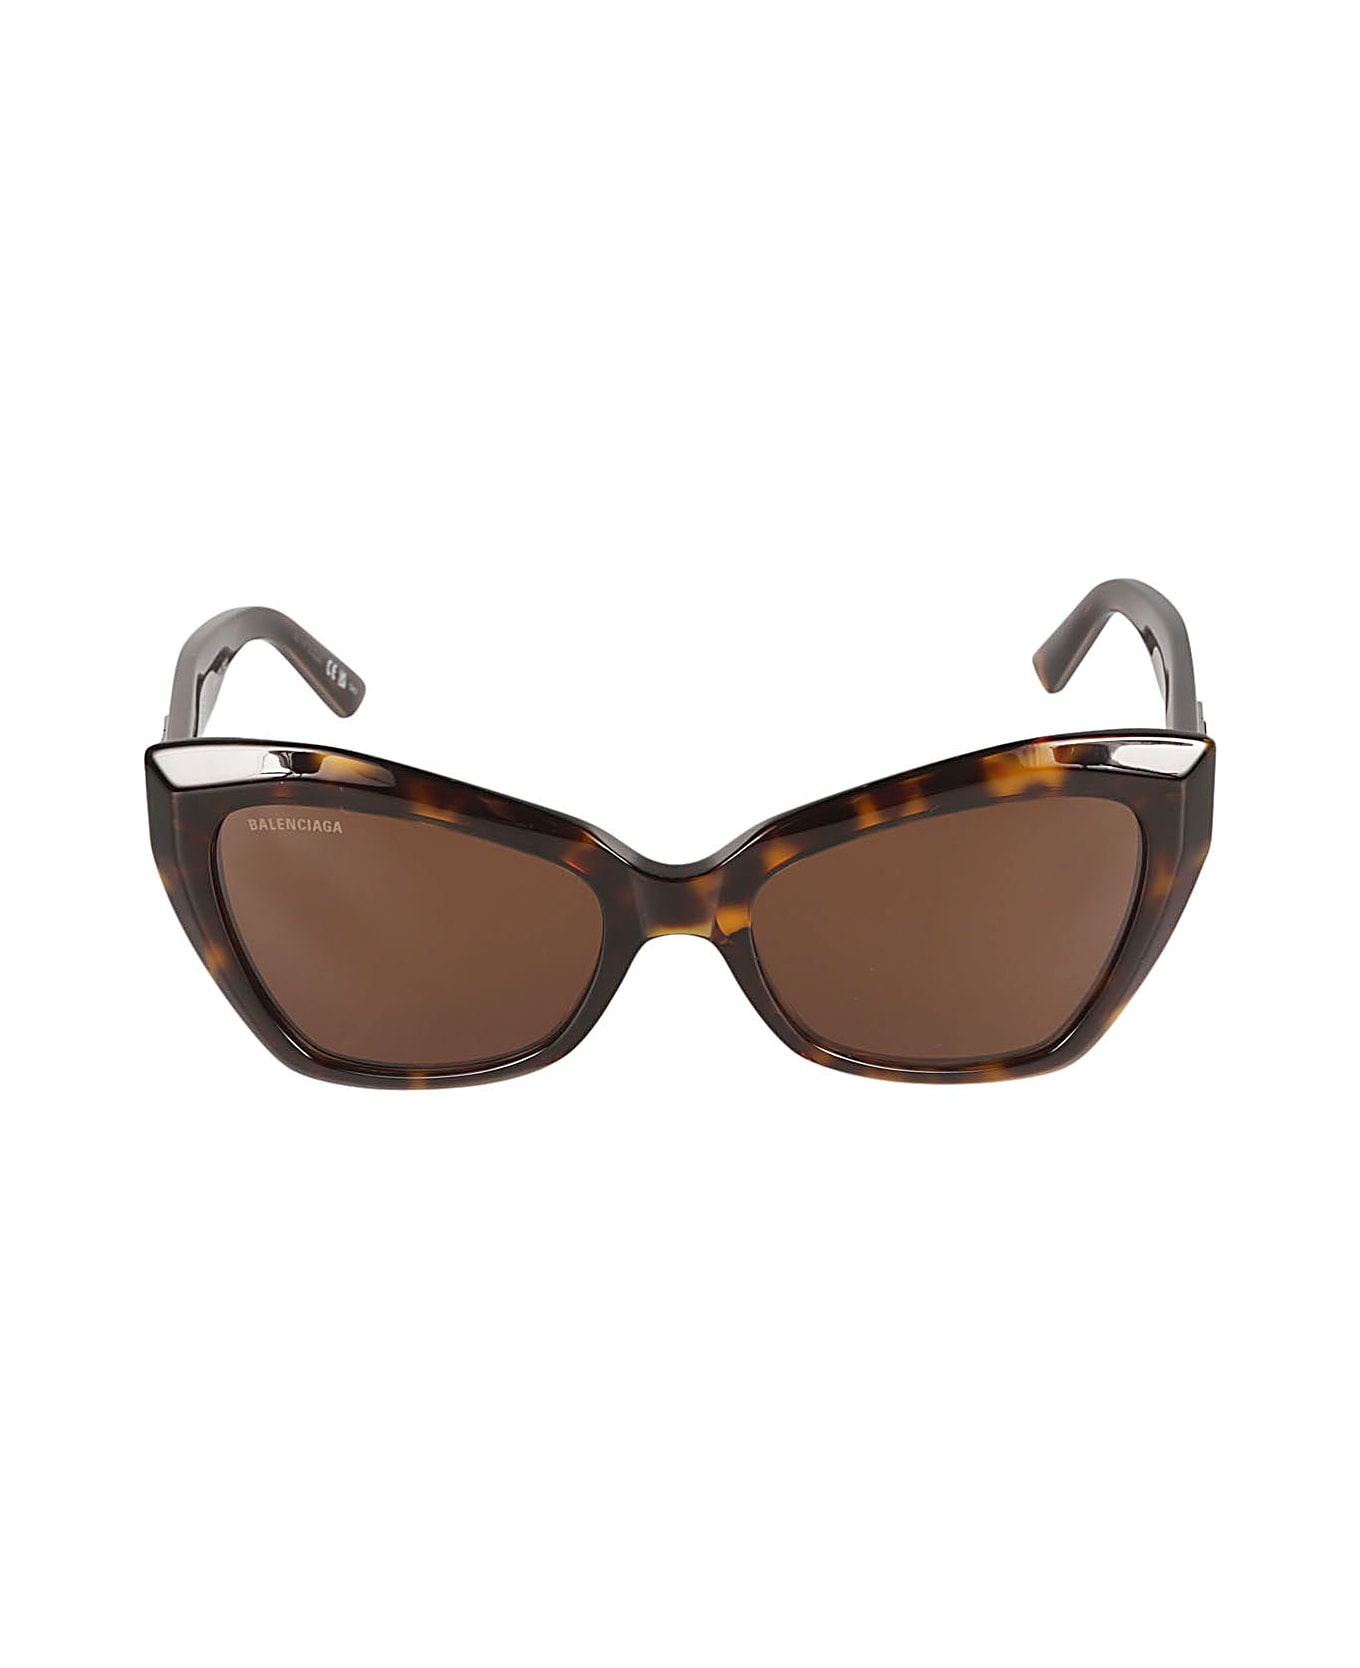 Balenciaga Eyewear Flame Effect Butterfly Frame Sunglasses - Havana/Brown